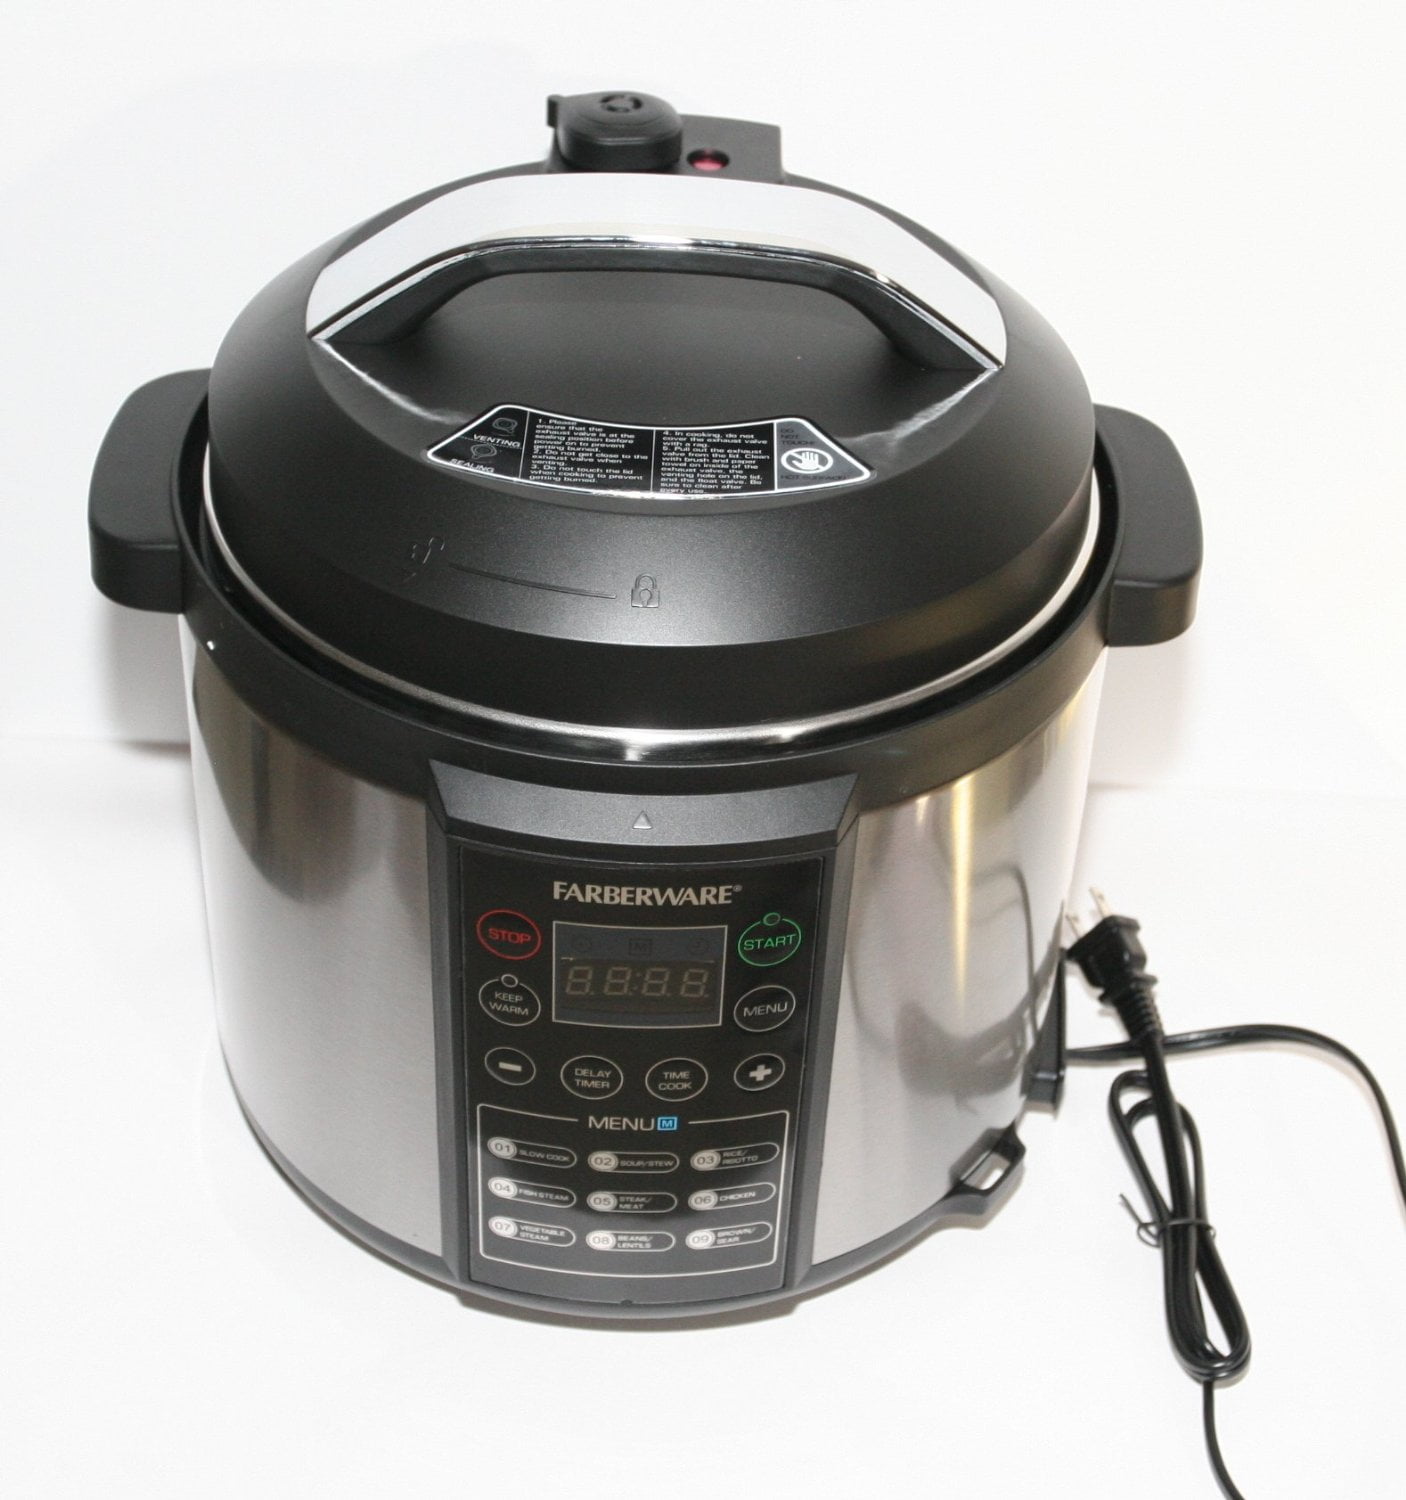 BLUELK 10-in-1 Electric Pressure Cooker, Multi-Functional Slow